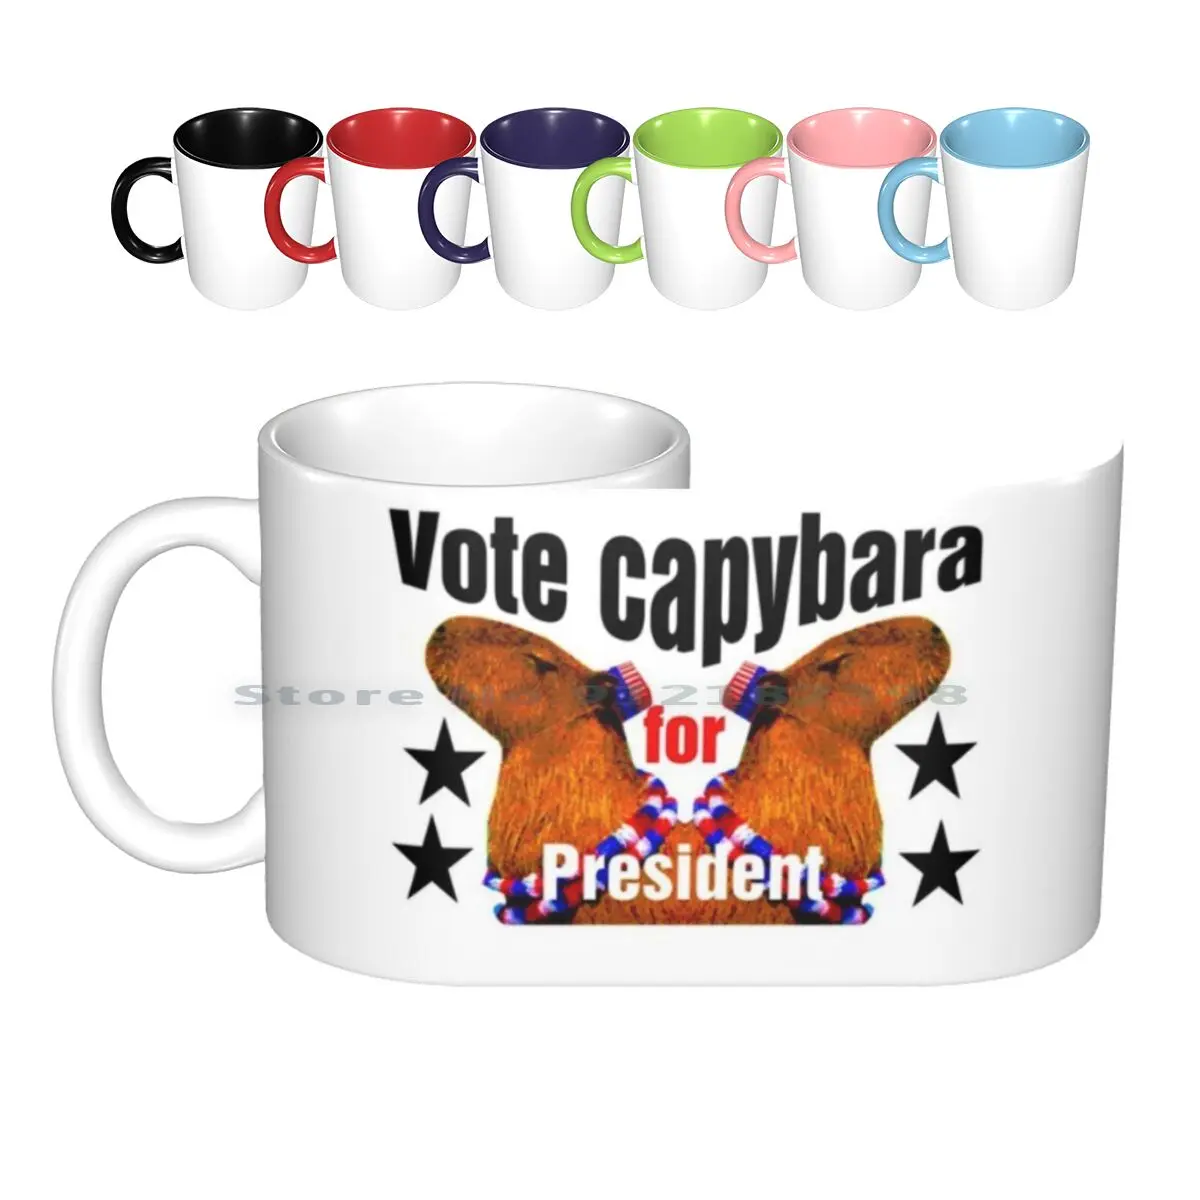 

Vote Capybara For President Ceramic Mugs Coffee Cups Milk Tea Mug Capybara President Capy Rescue Election Vote Animal Cute